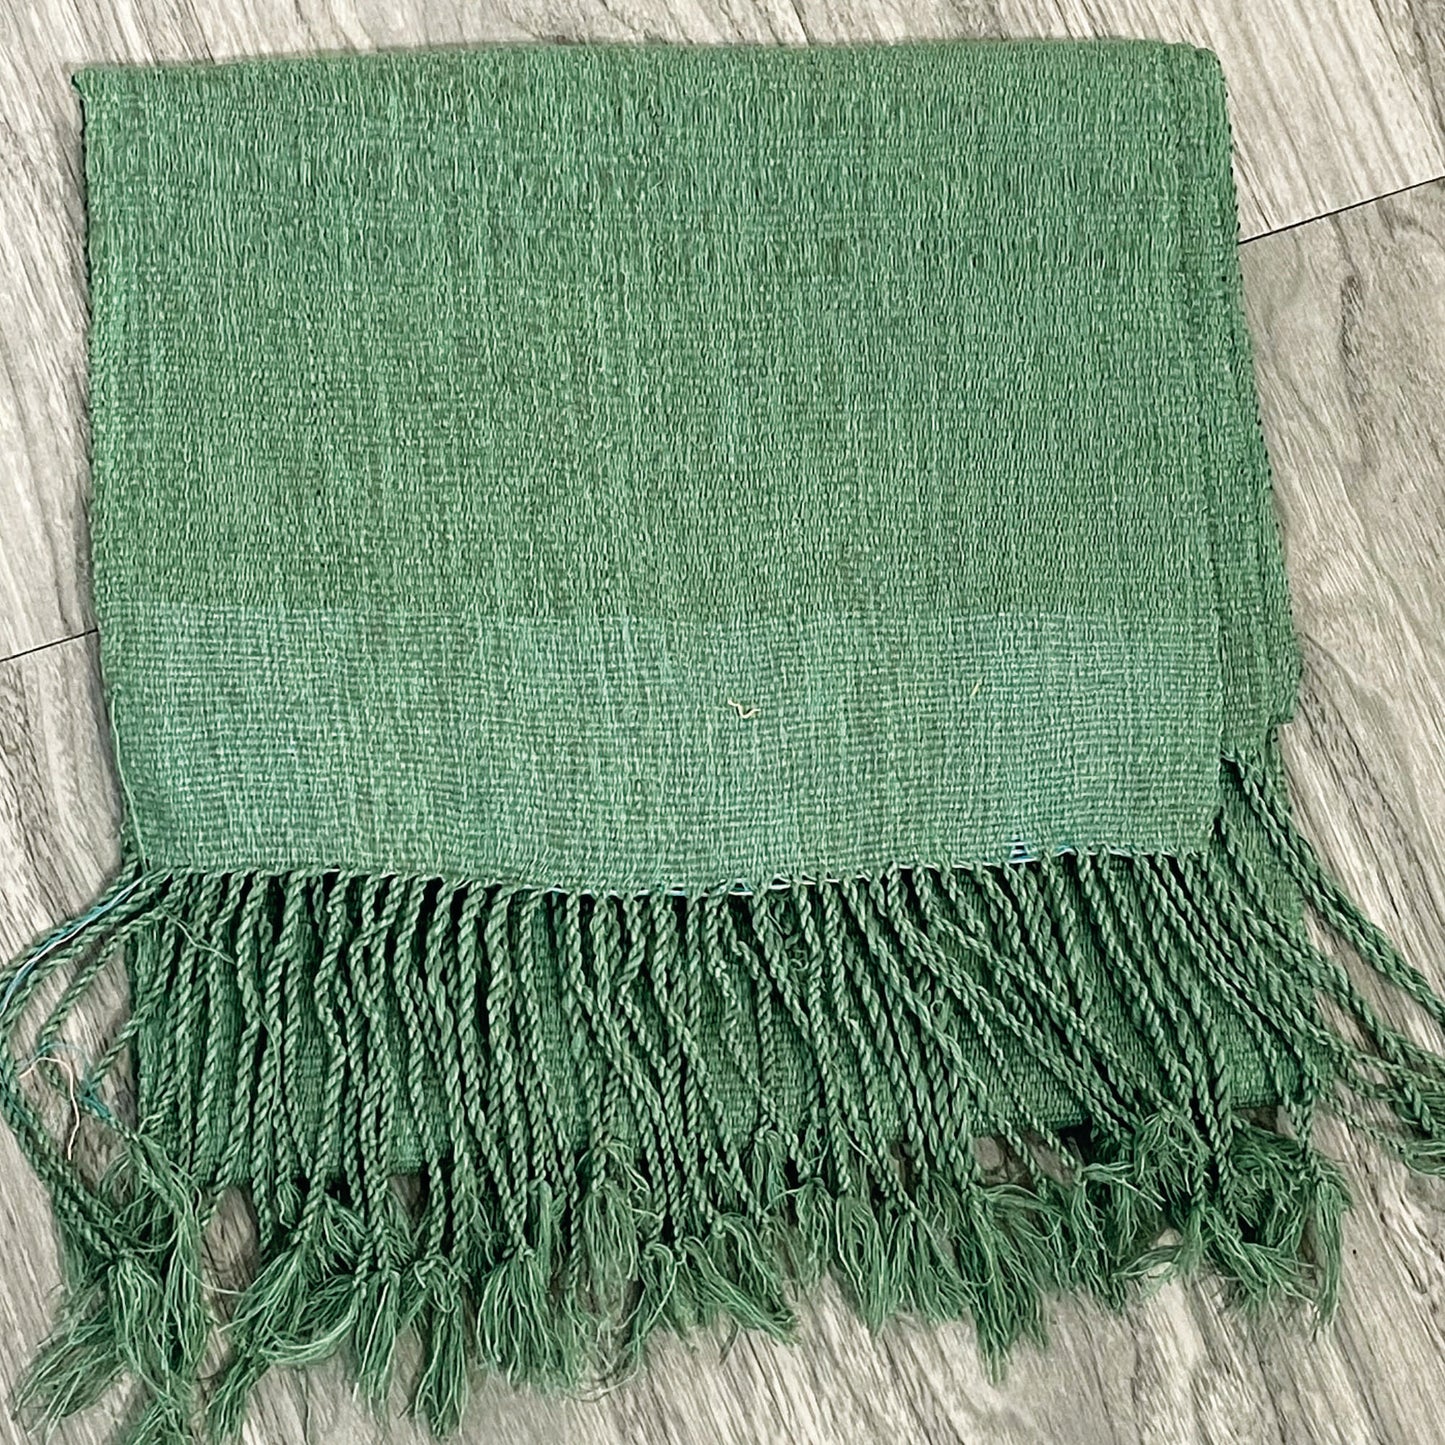 Bhutanese Sewn Unisex Green Cotton & Linen Scarf 